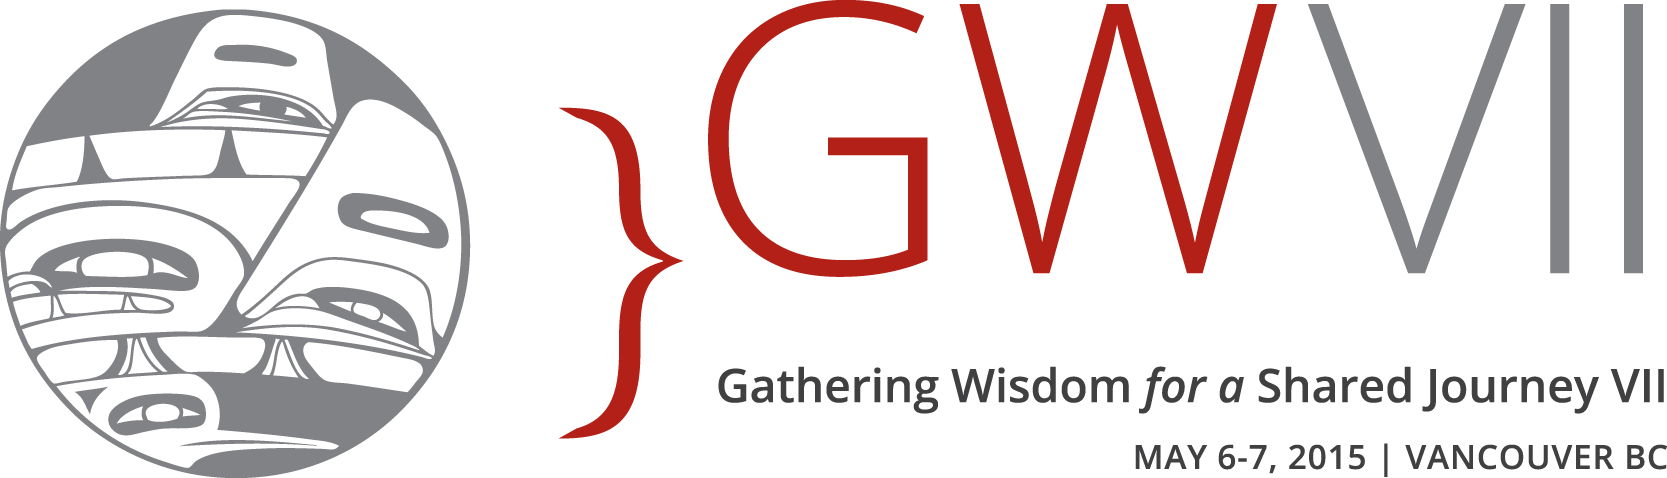 FNHA-Gathering-Wisdom-VII.jpg